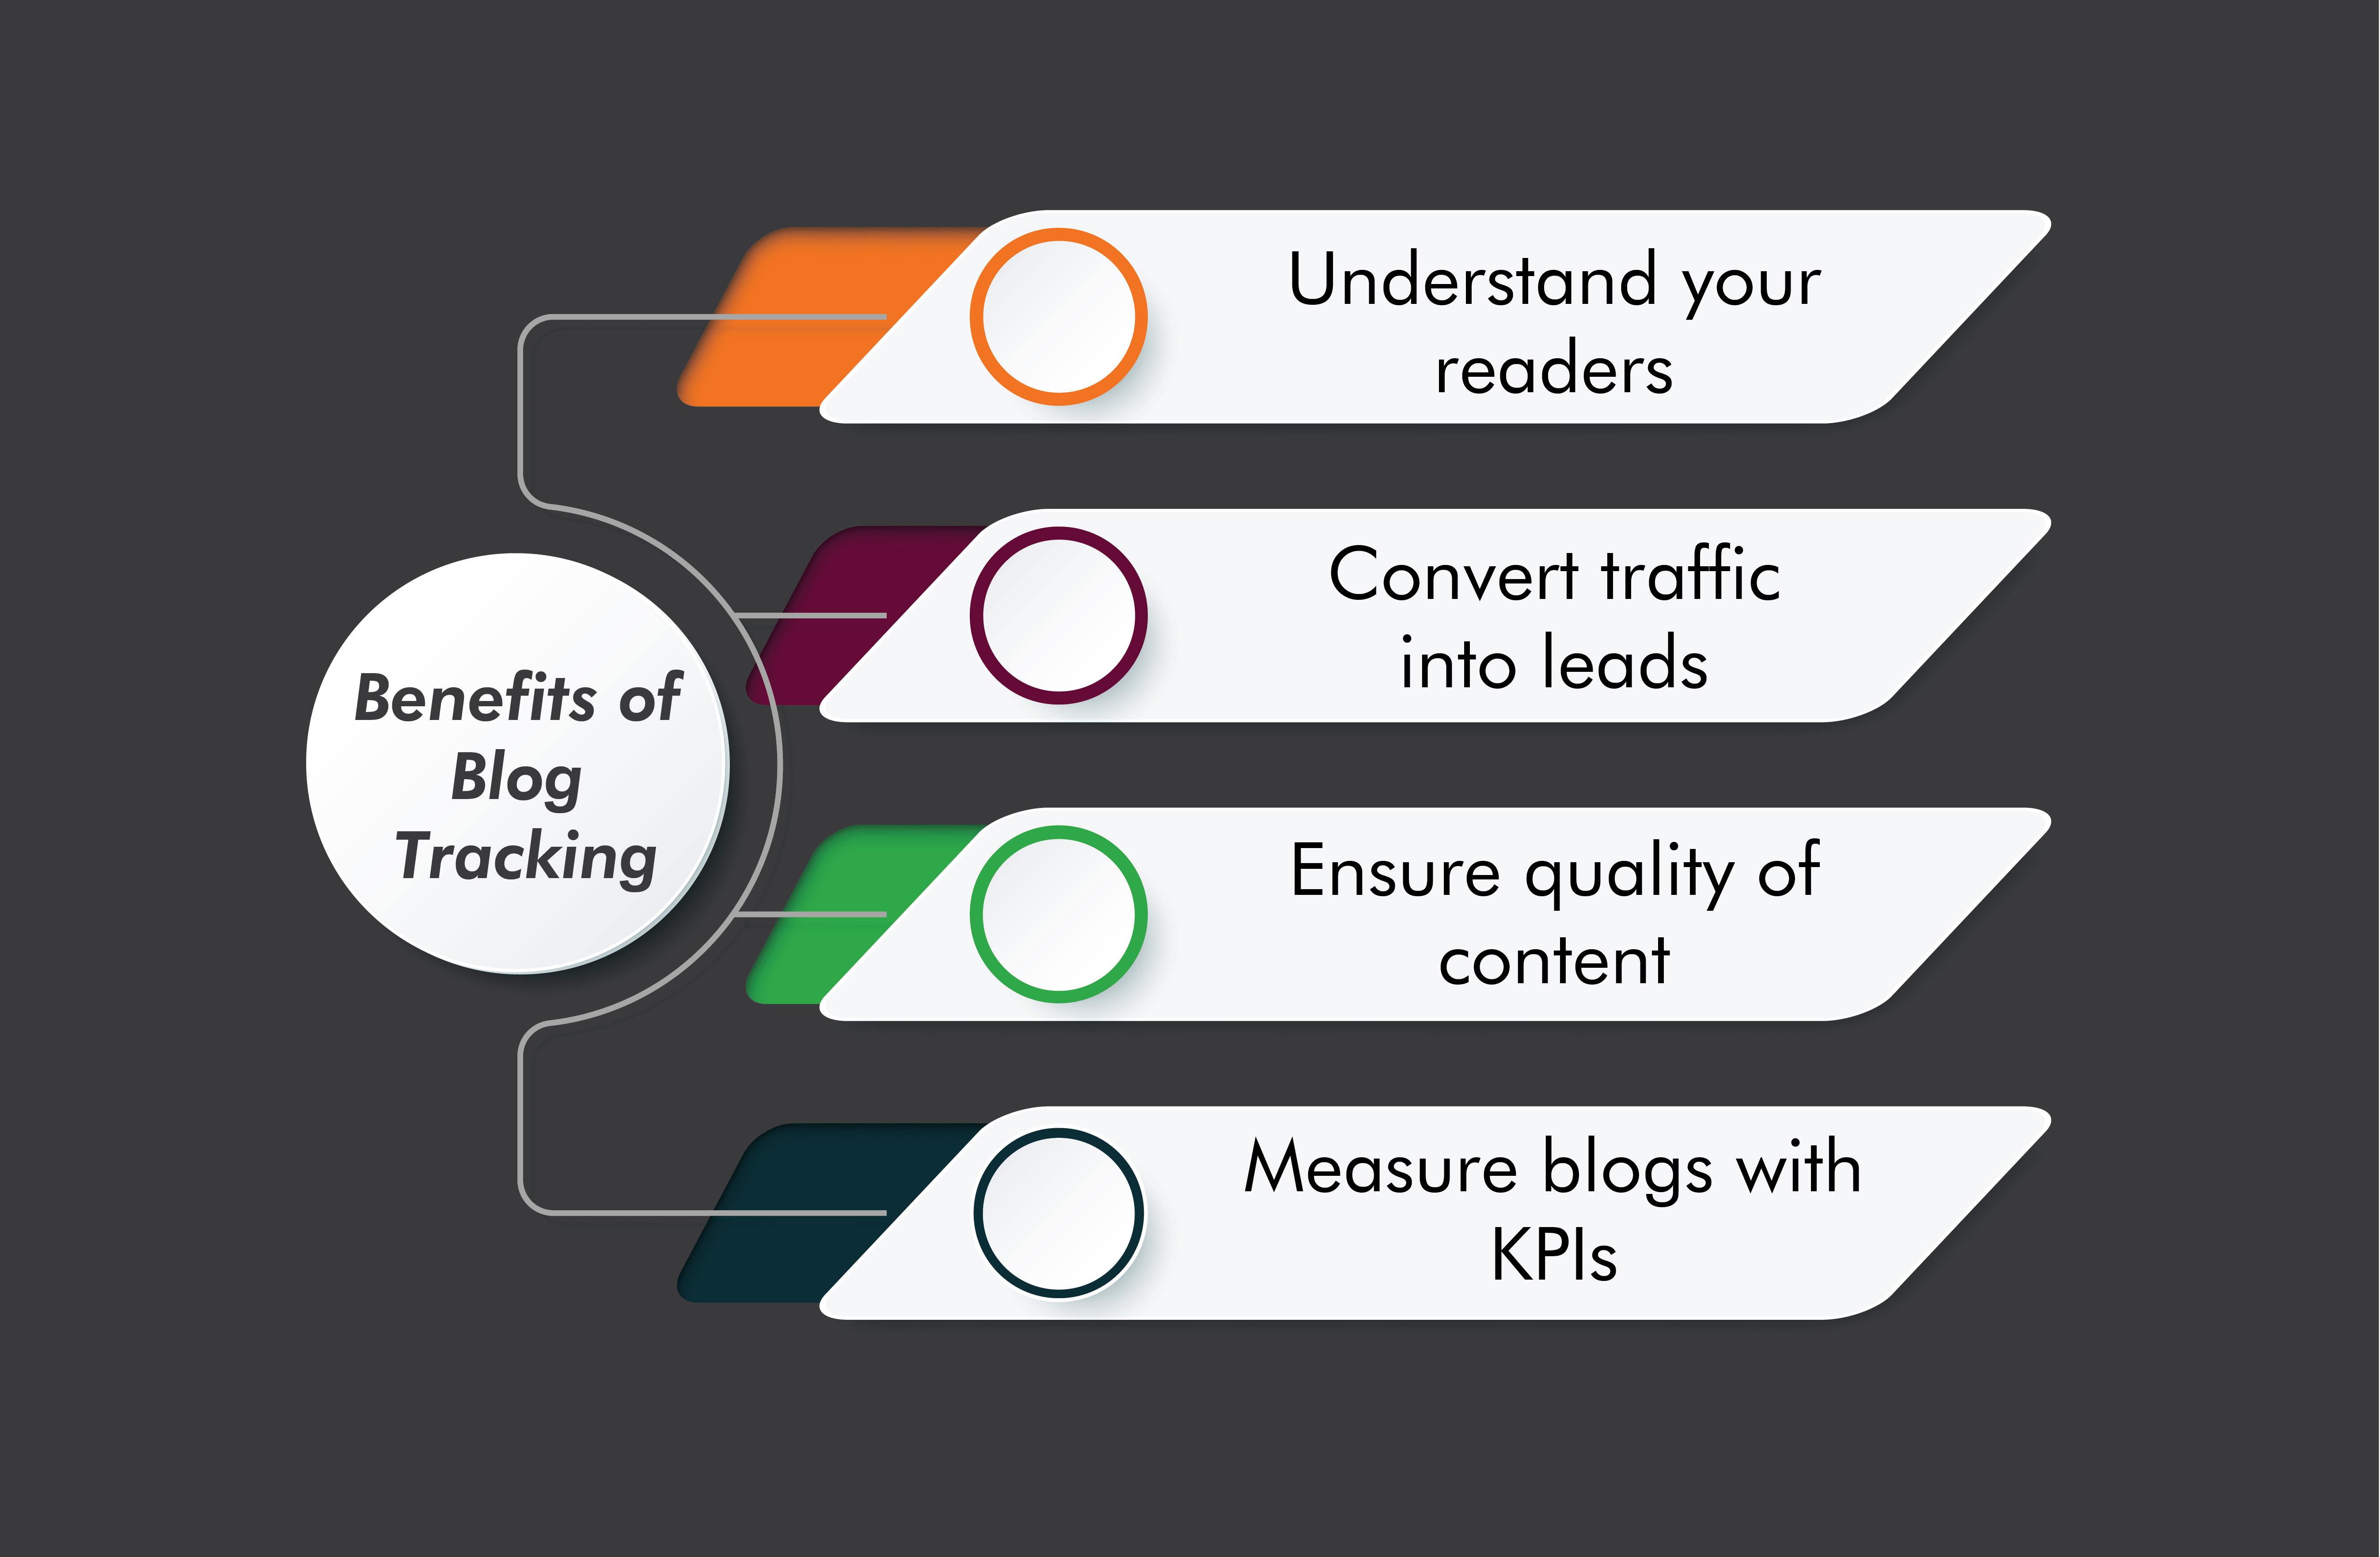 Benefits of Blog Tracking